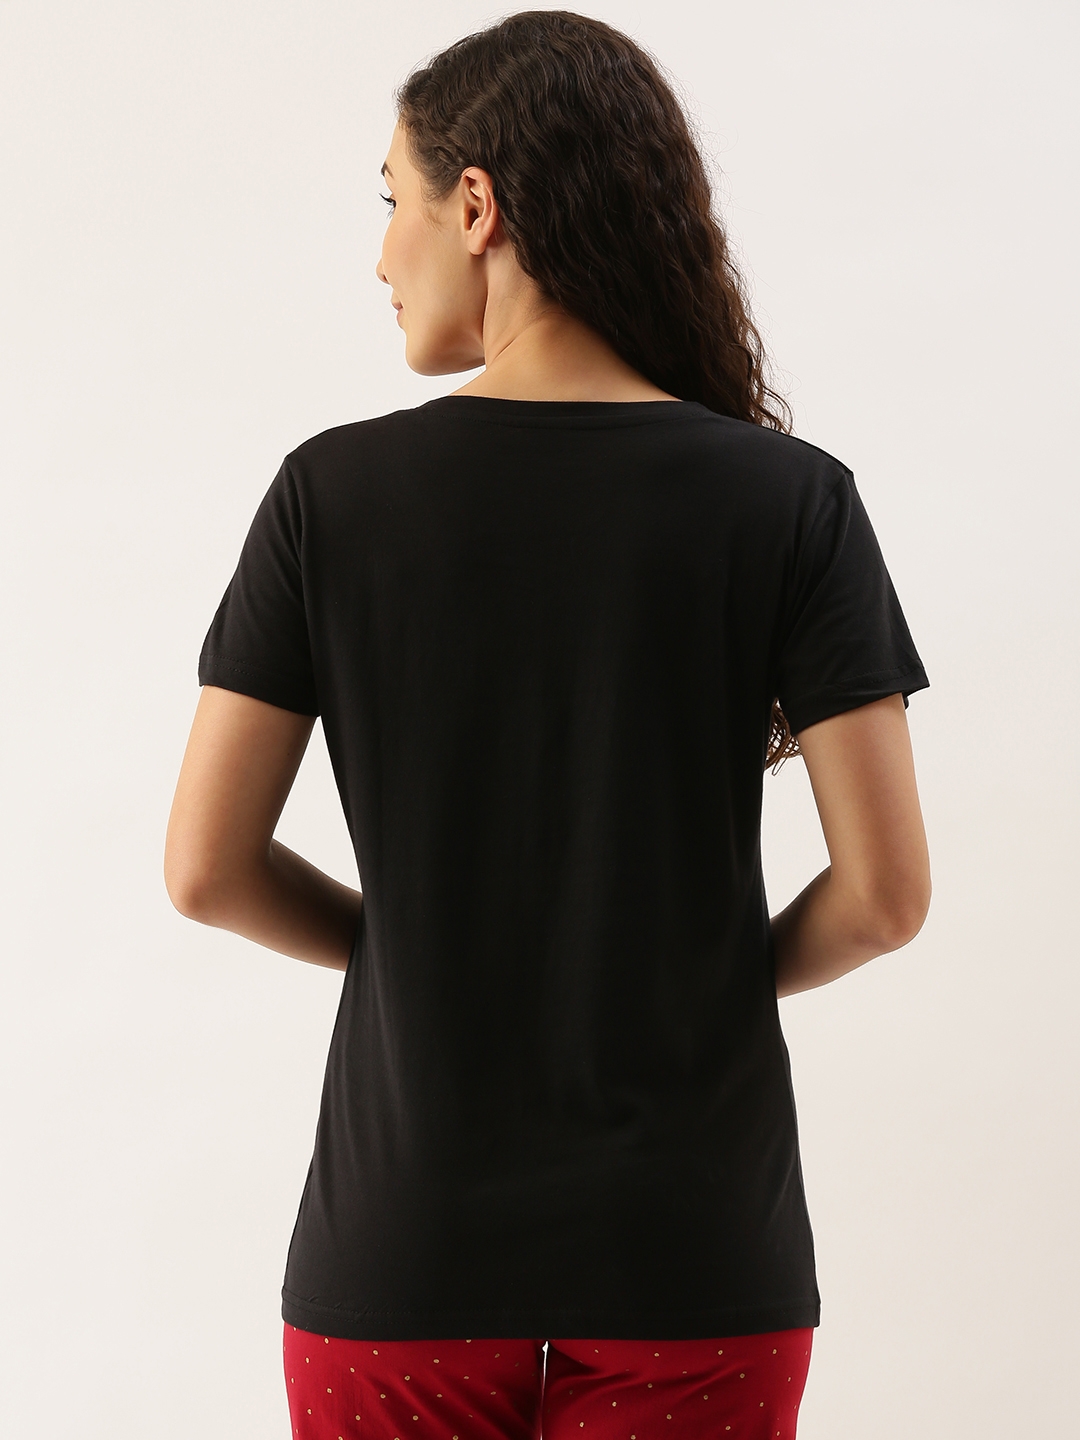 Kryptic | Women's Black Cotton Printed T-Shirts 5